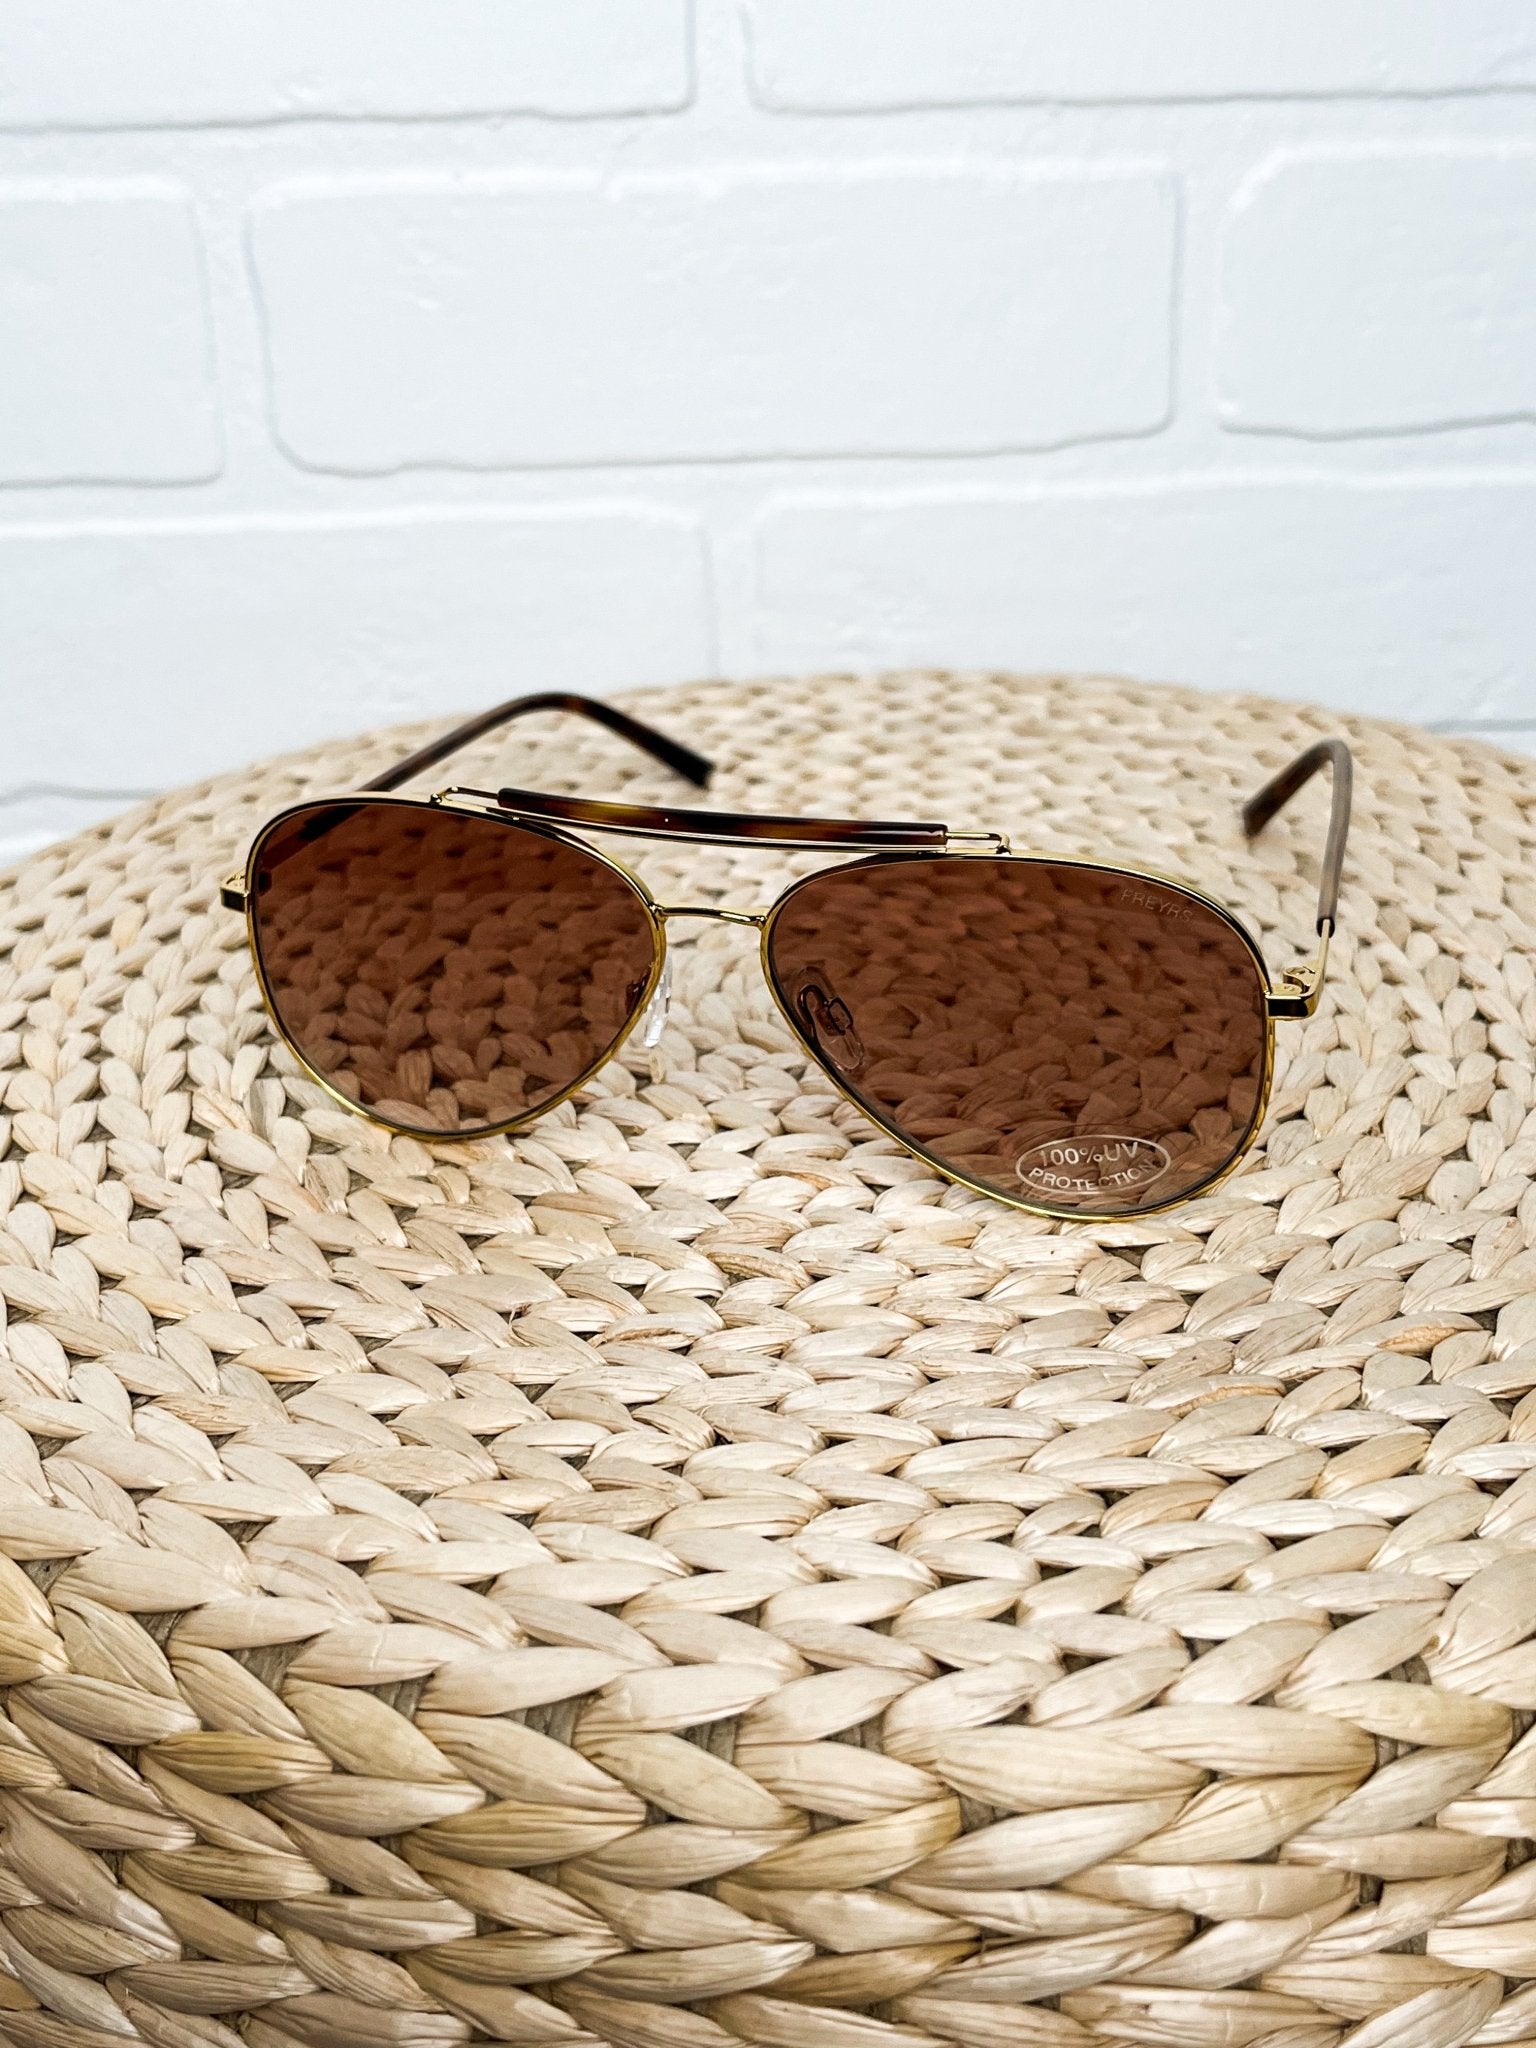 Freyrs Dallas sunglasses gold/brown - Stylish Sunglasses - Trendy Glasses at Lush Fashion Lounge Boutique in Oklahoma